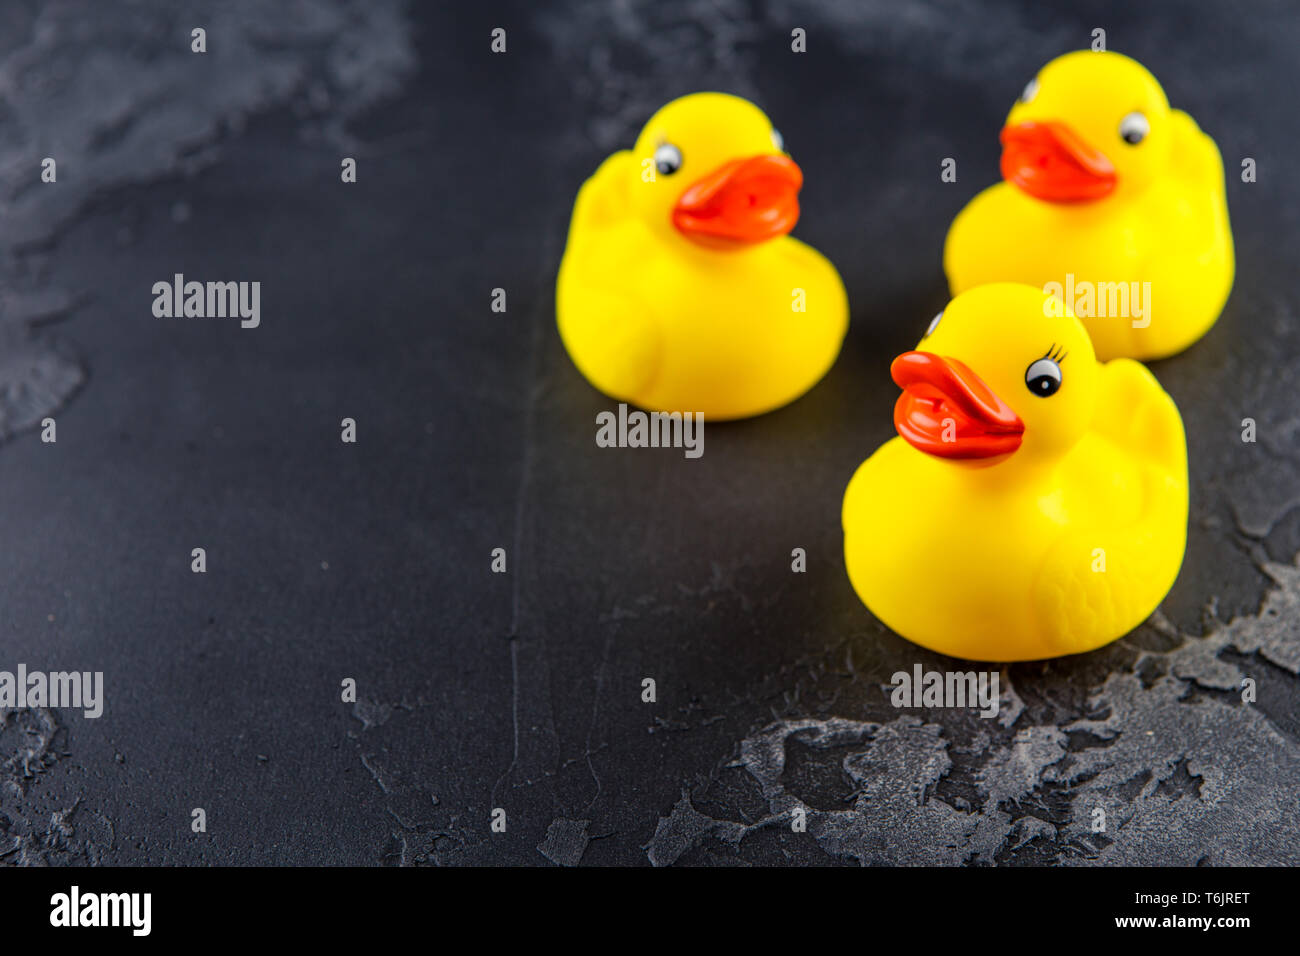 YEllow rubber ducks Stock Photo